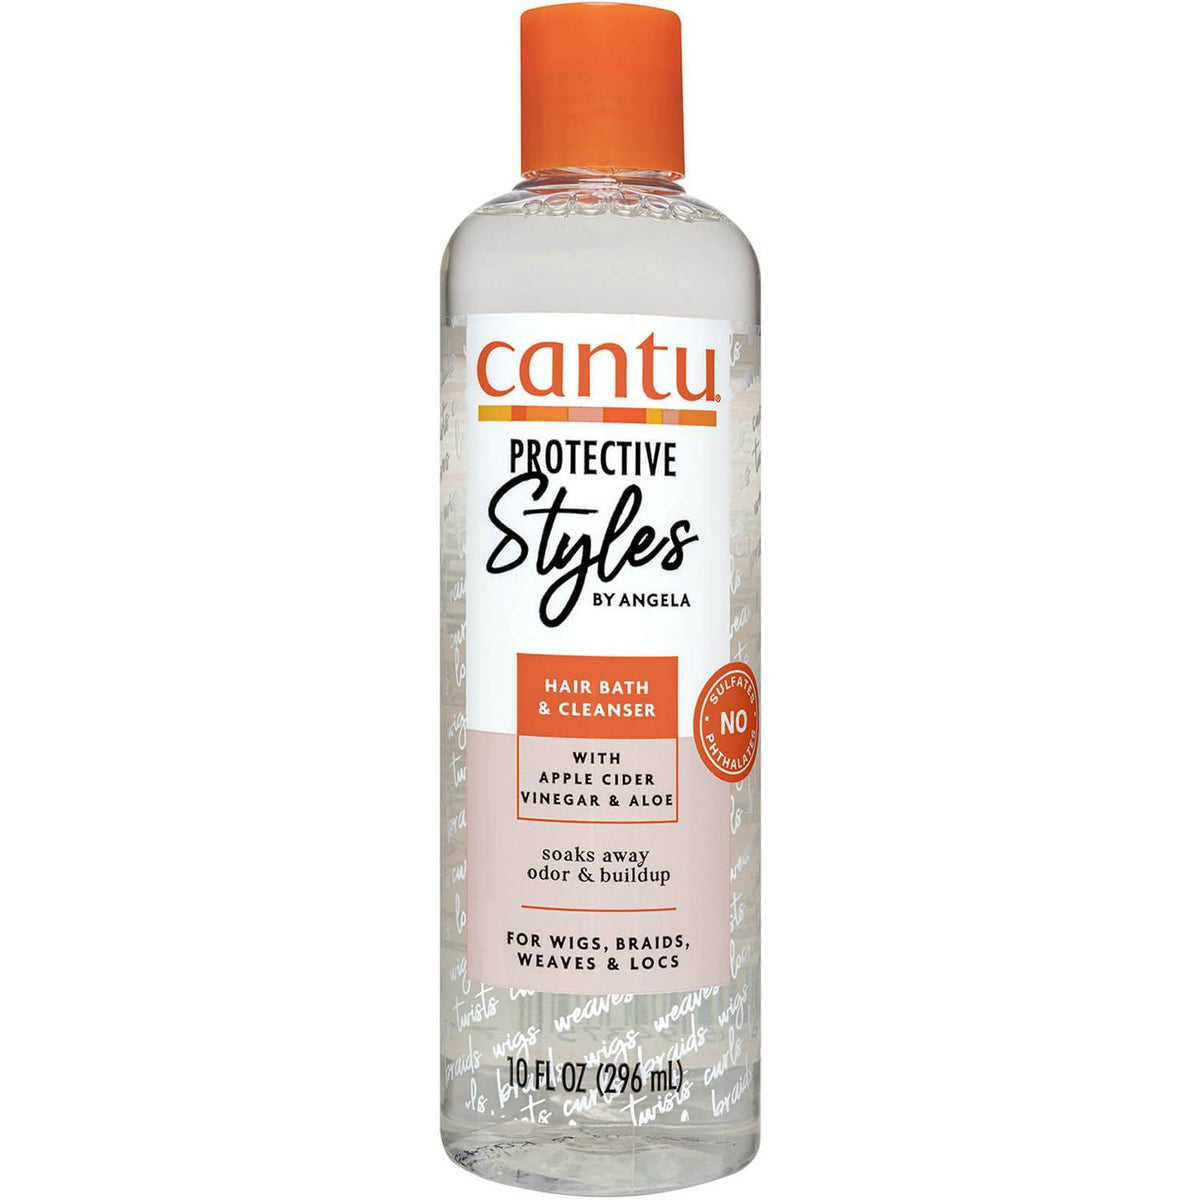 Cantu Protective Styles Hair Bath & Cleanser -296ml